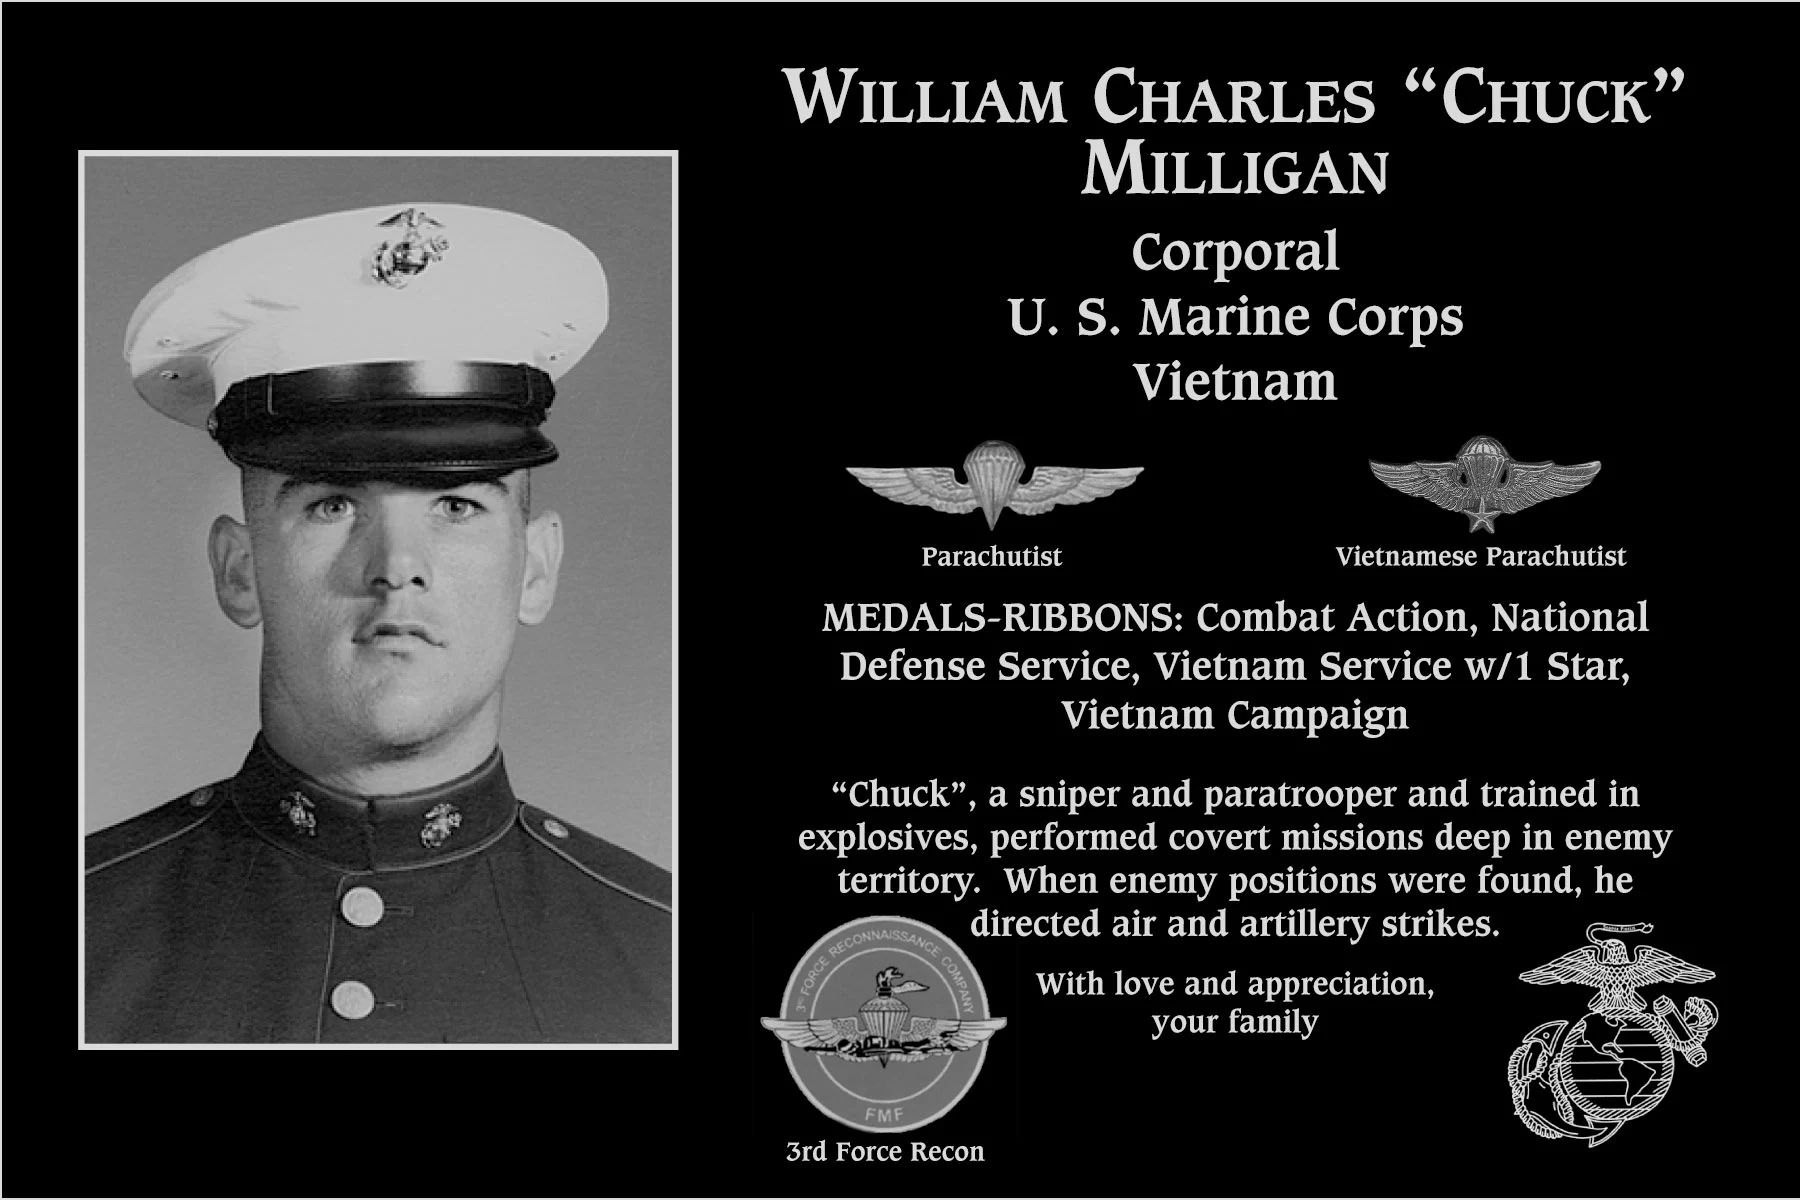 William Charles “Chuck” Milligan